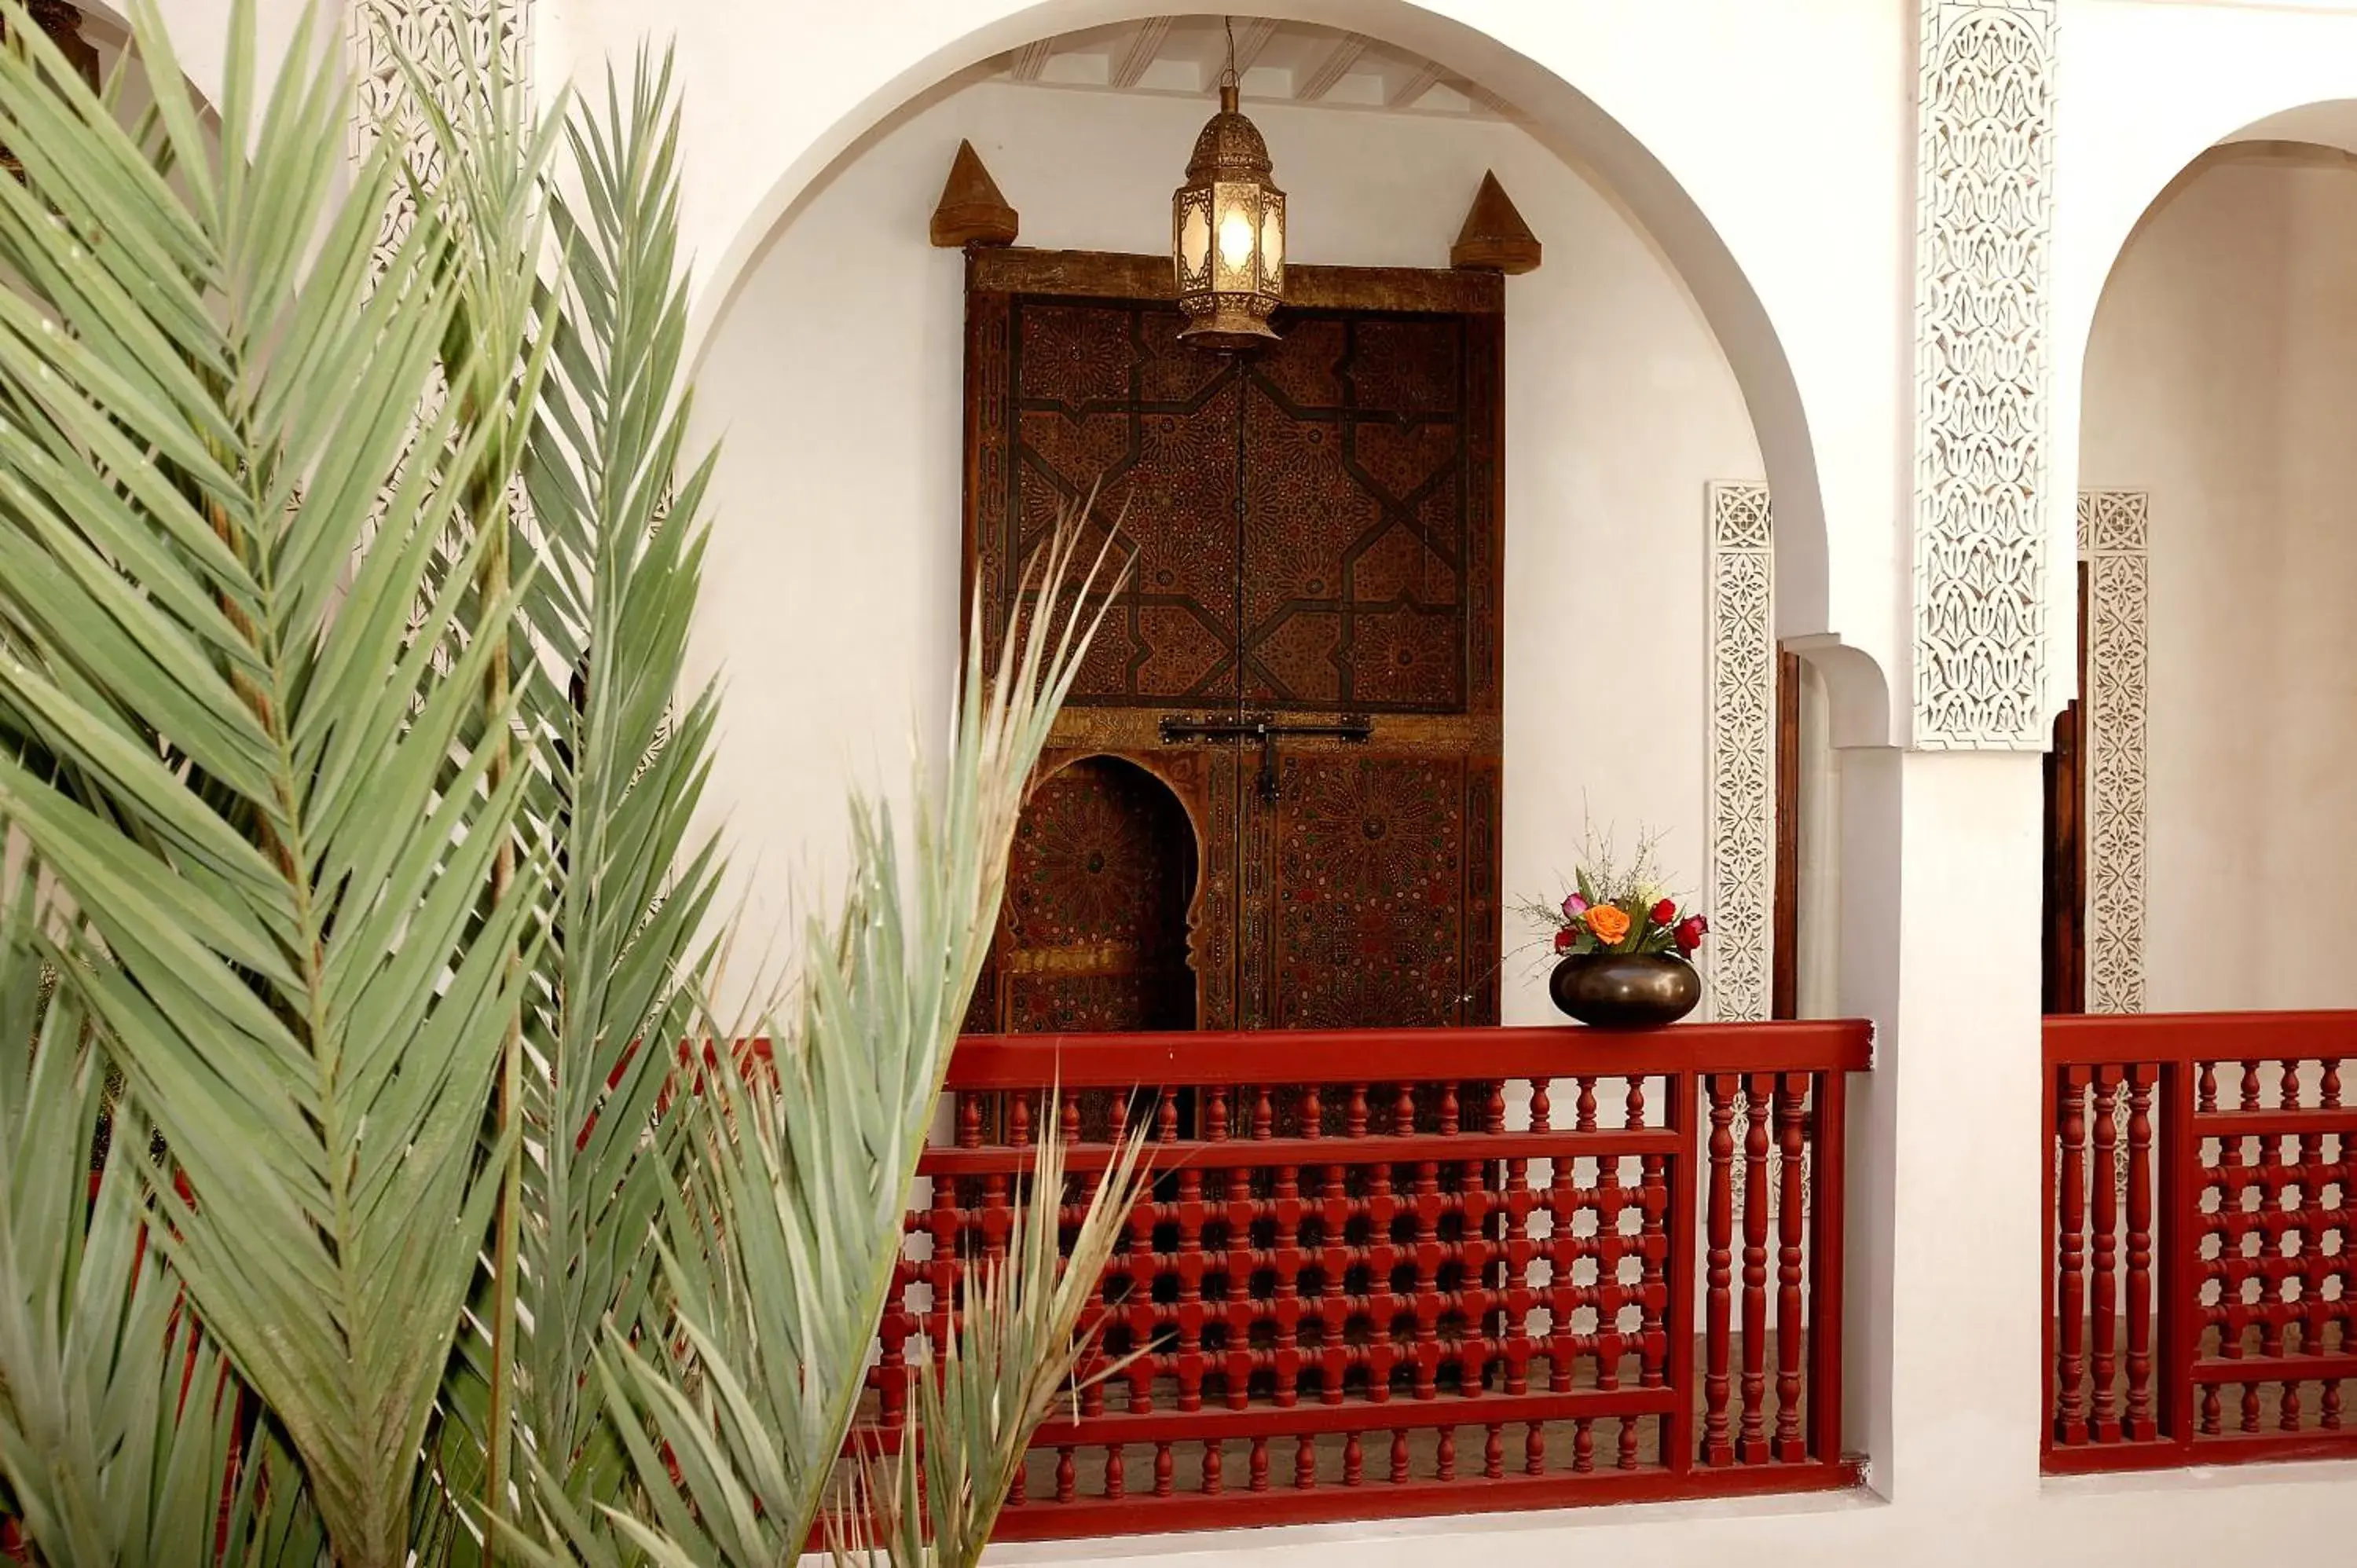 Decorative detail in Riad Aladdin